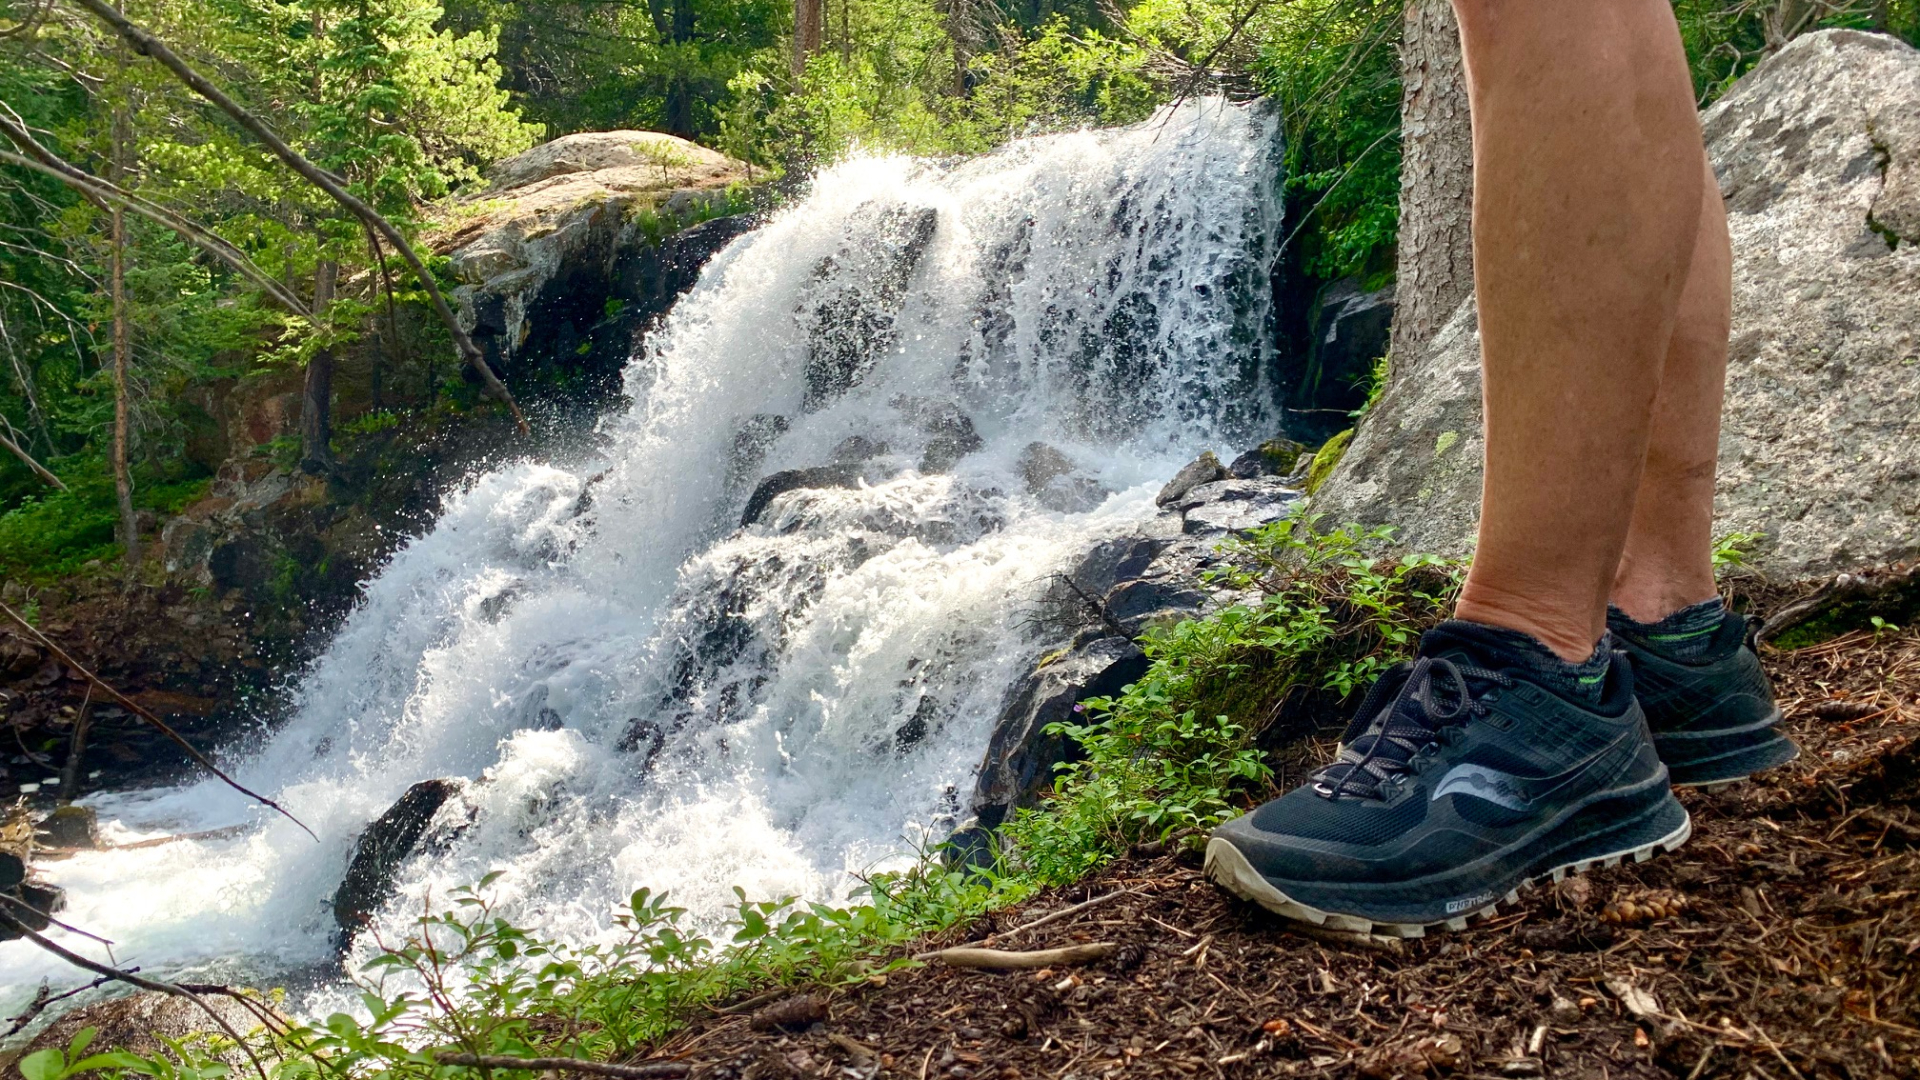 iniciar trail running: zapatos